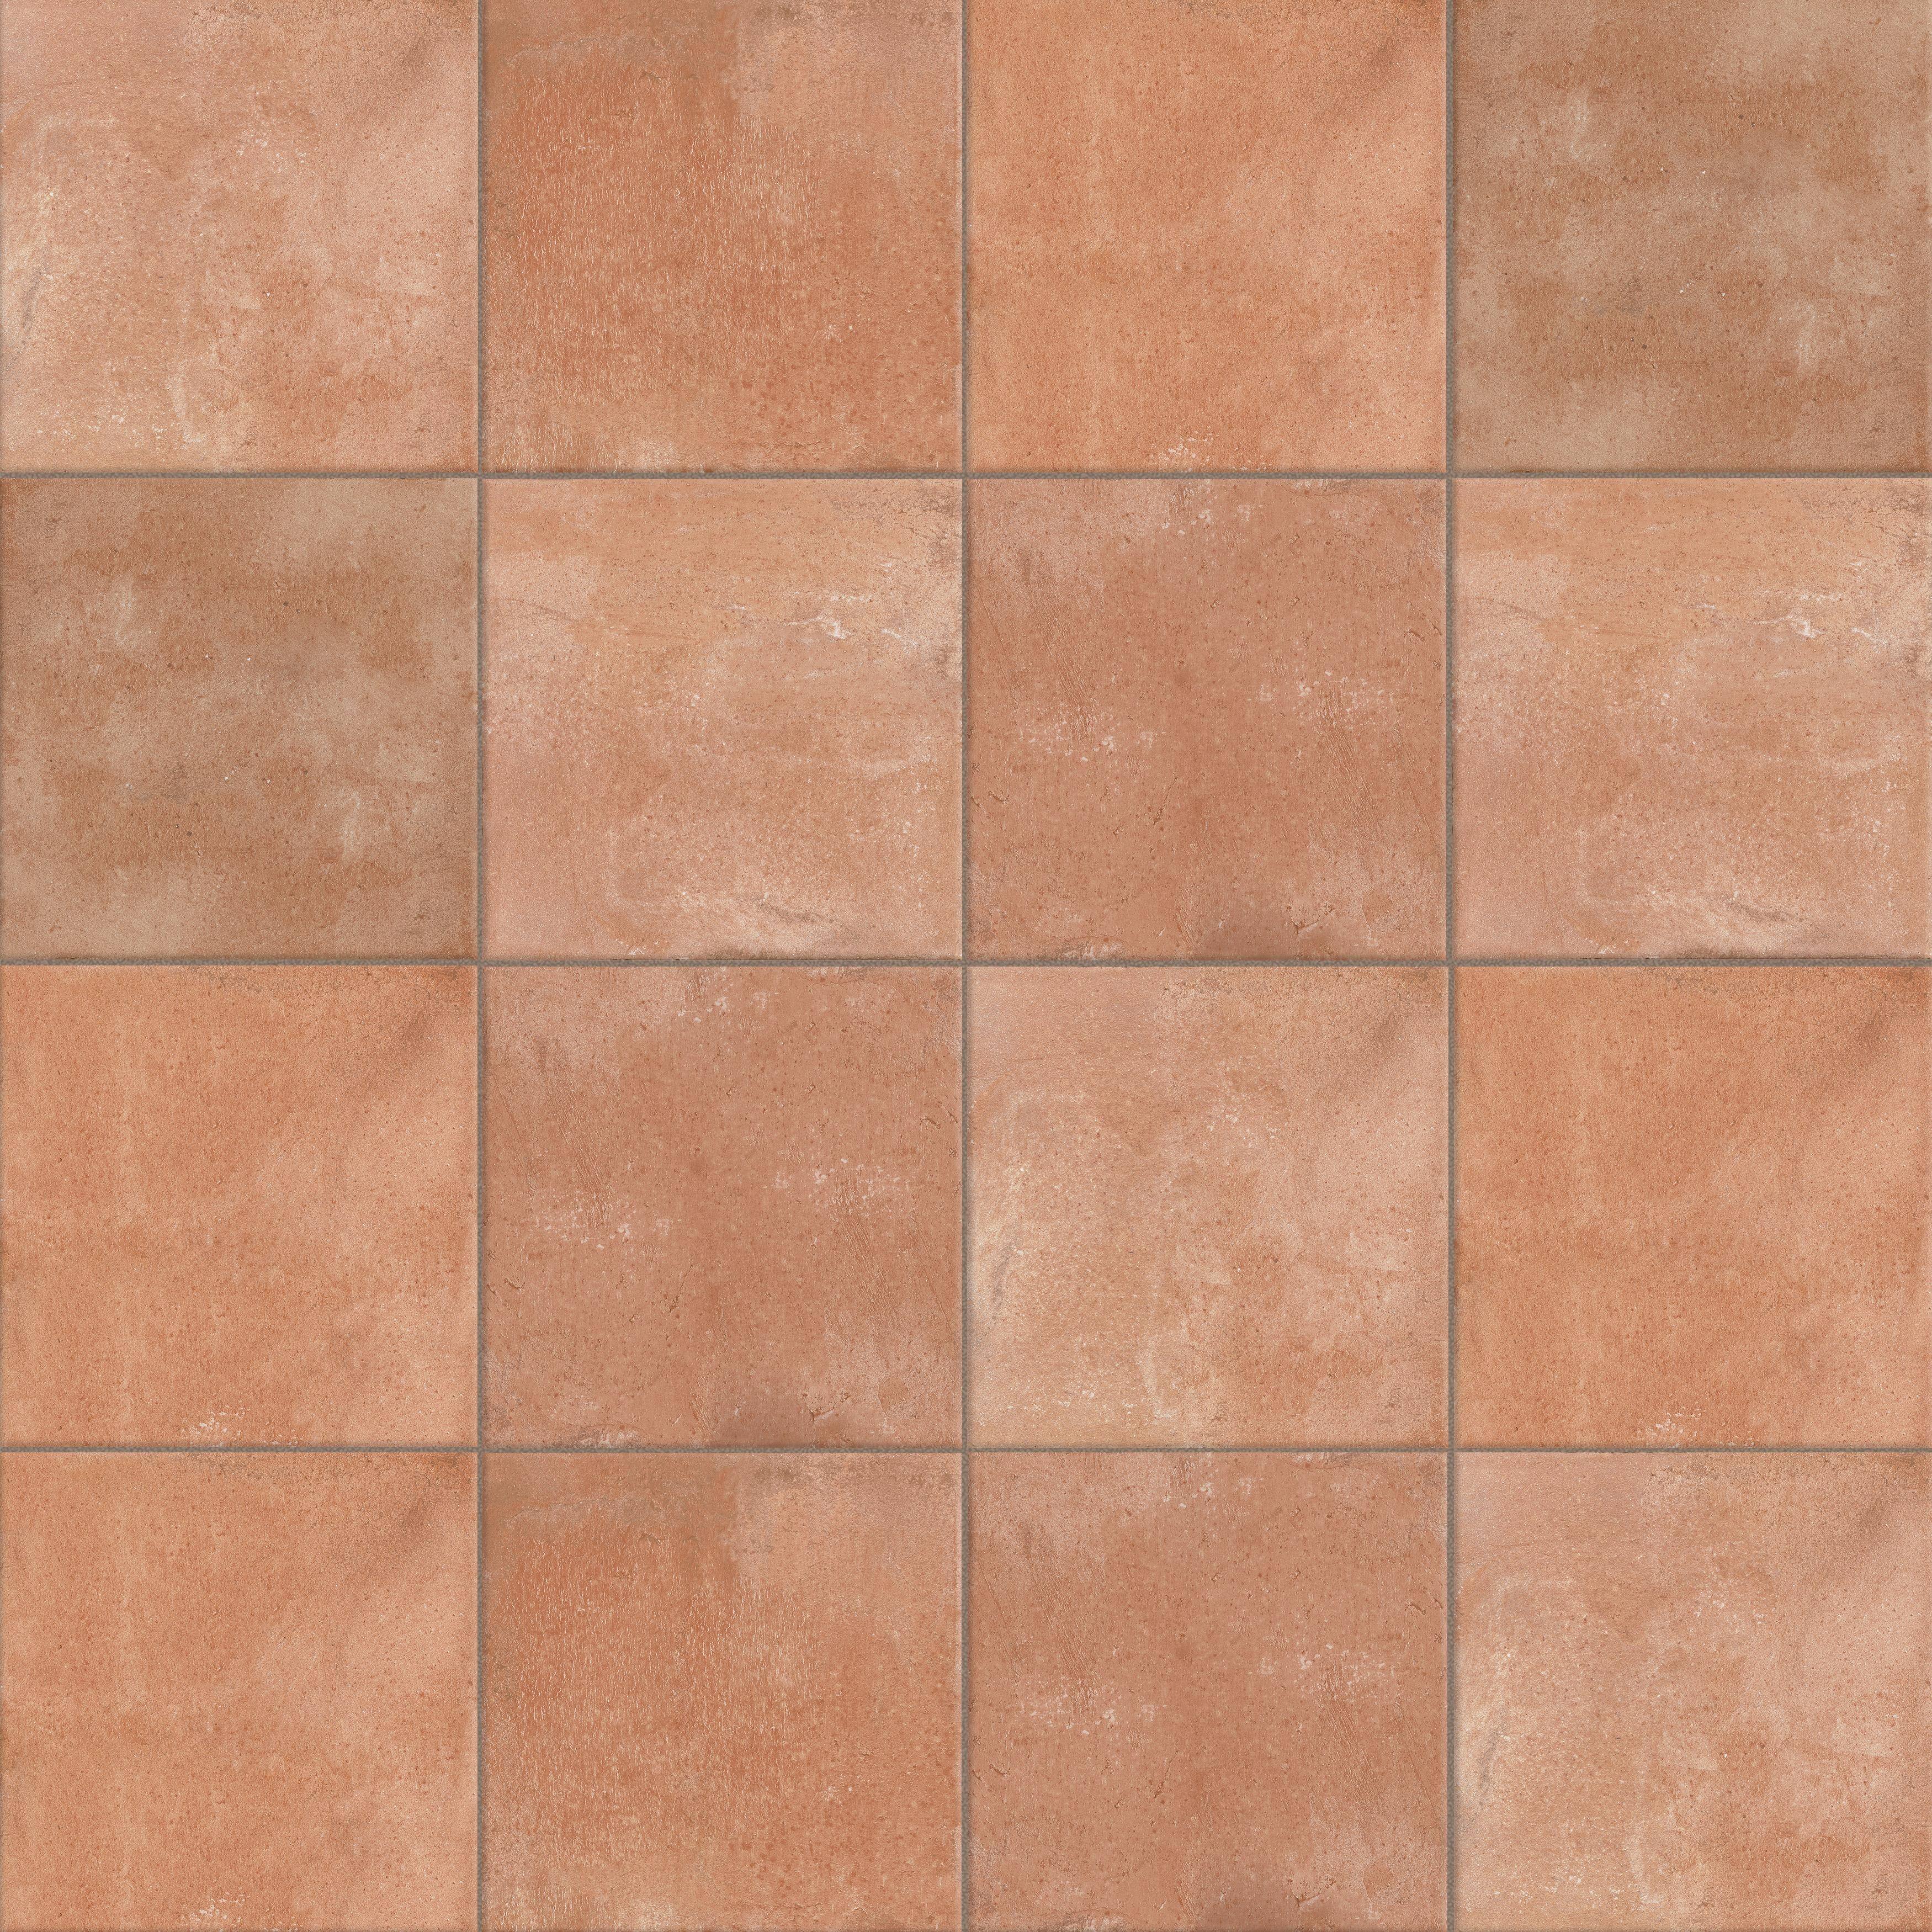 Merola Tile Manises Cuero 13-1/8" x 13-1/8" Ceramic Floor and Wall Tile